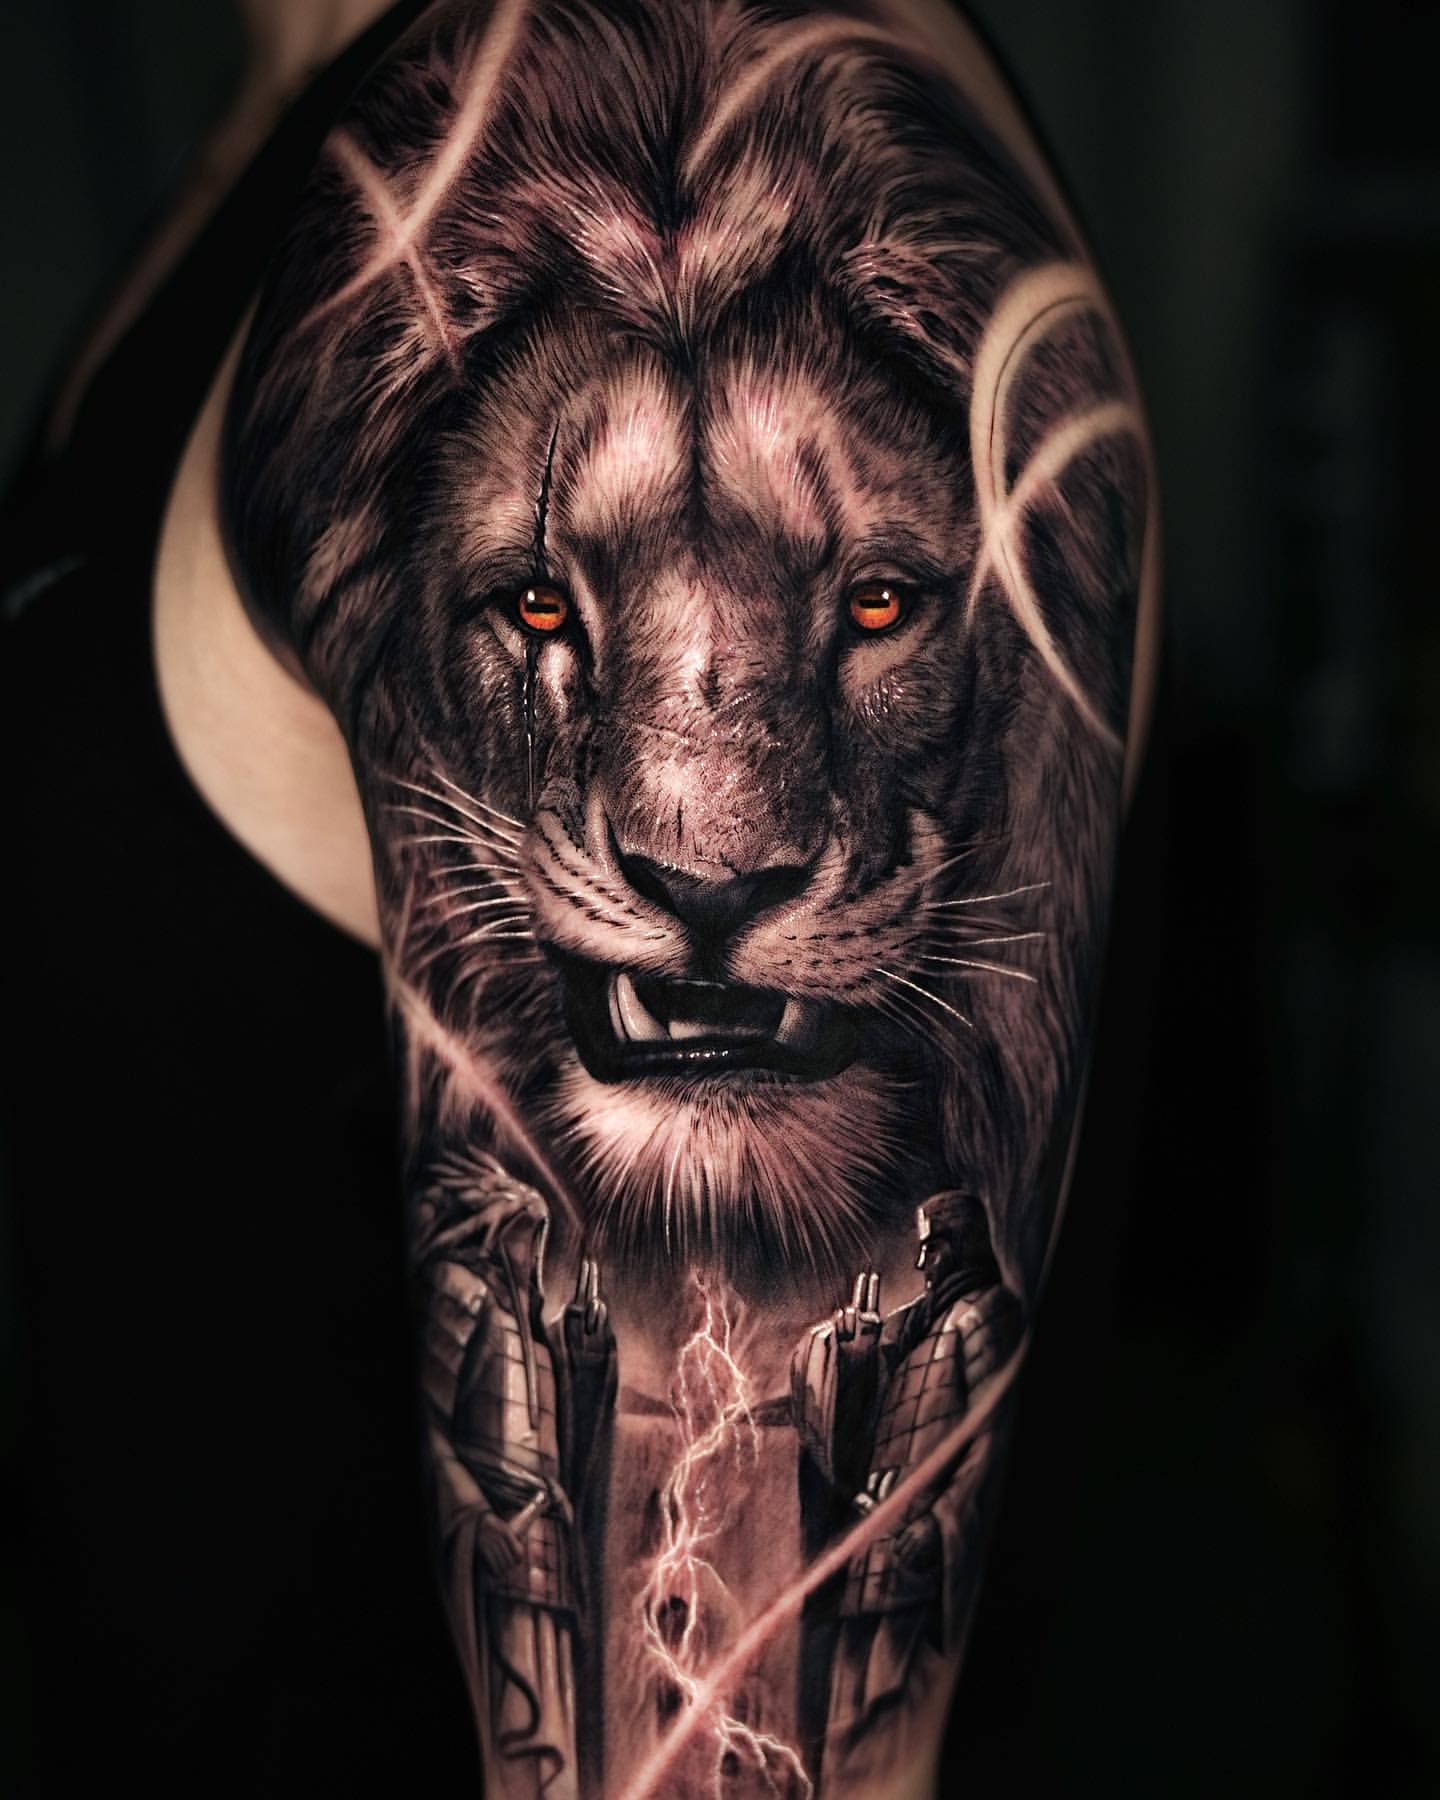 Tattoo uploaded by Edward Lott • Black and grey lion #blackandgreylion #lion  #liontattoo #blackandgreytattoo #realism • Tattoodo